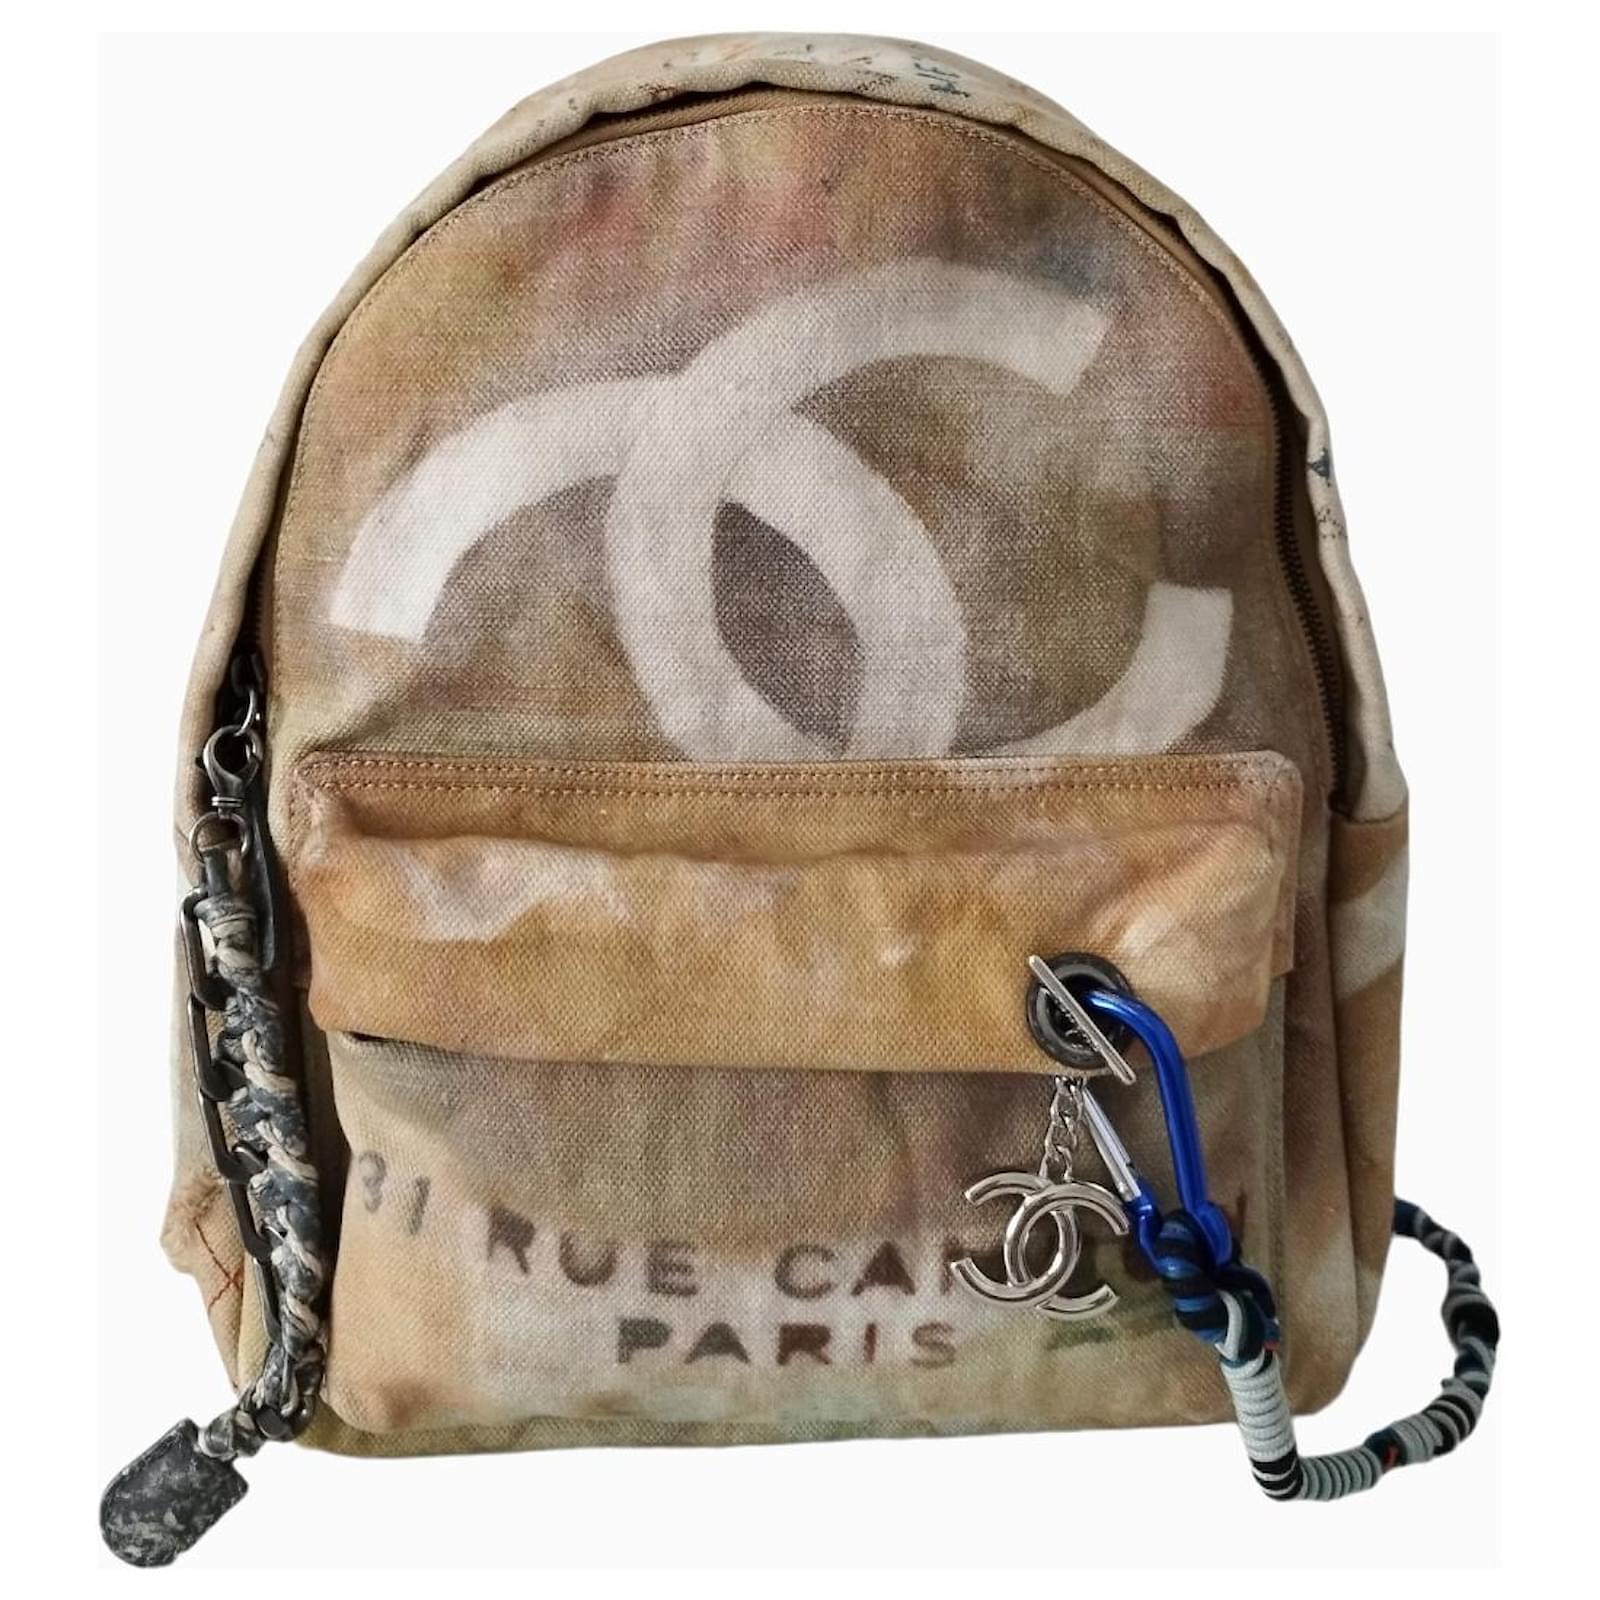 2014 Chanel Beige Painted Canvas Medium Graffiti Art School Backpack